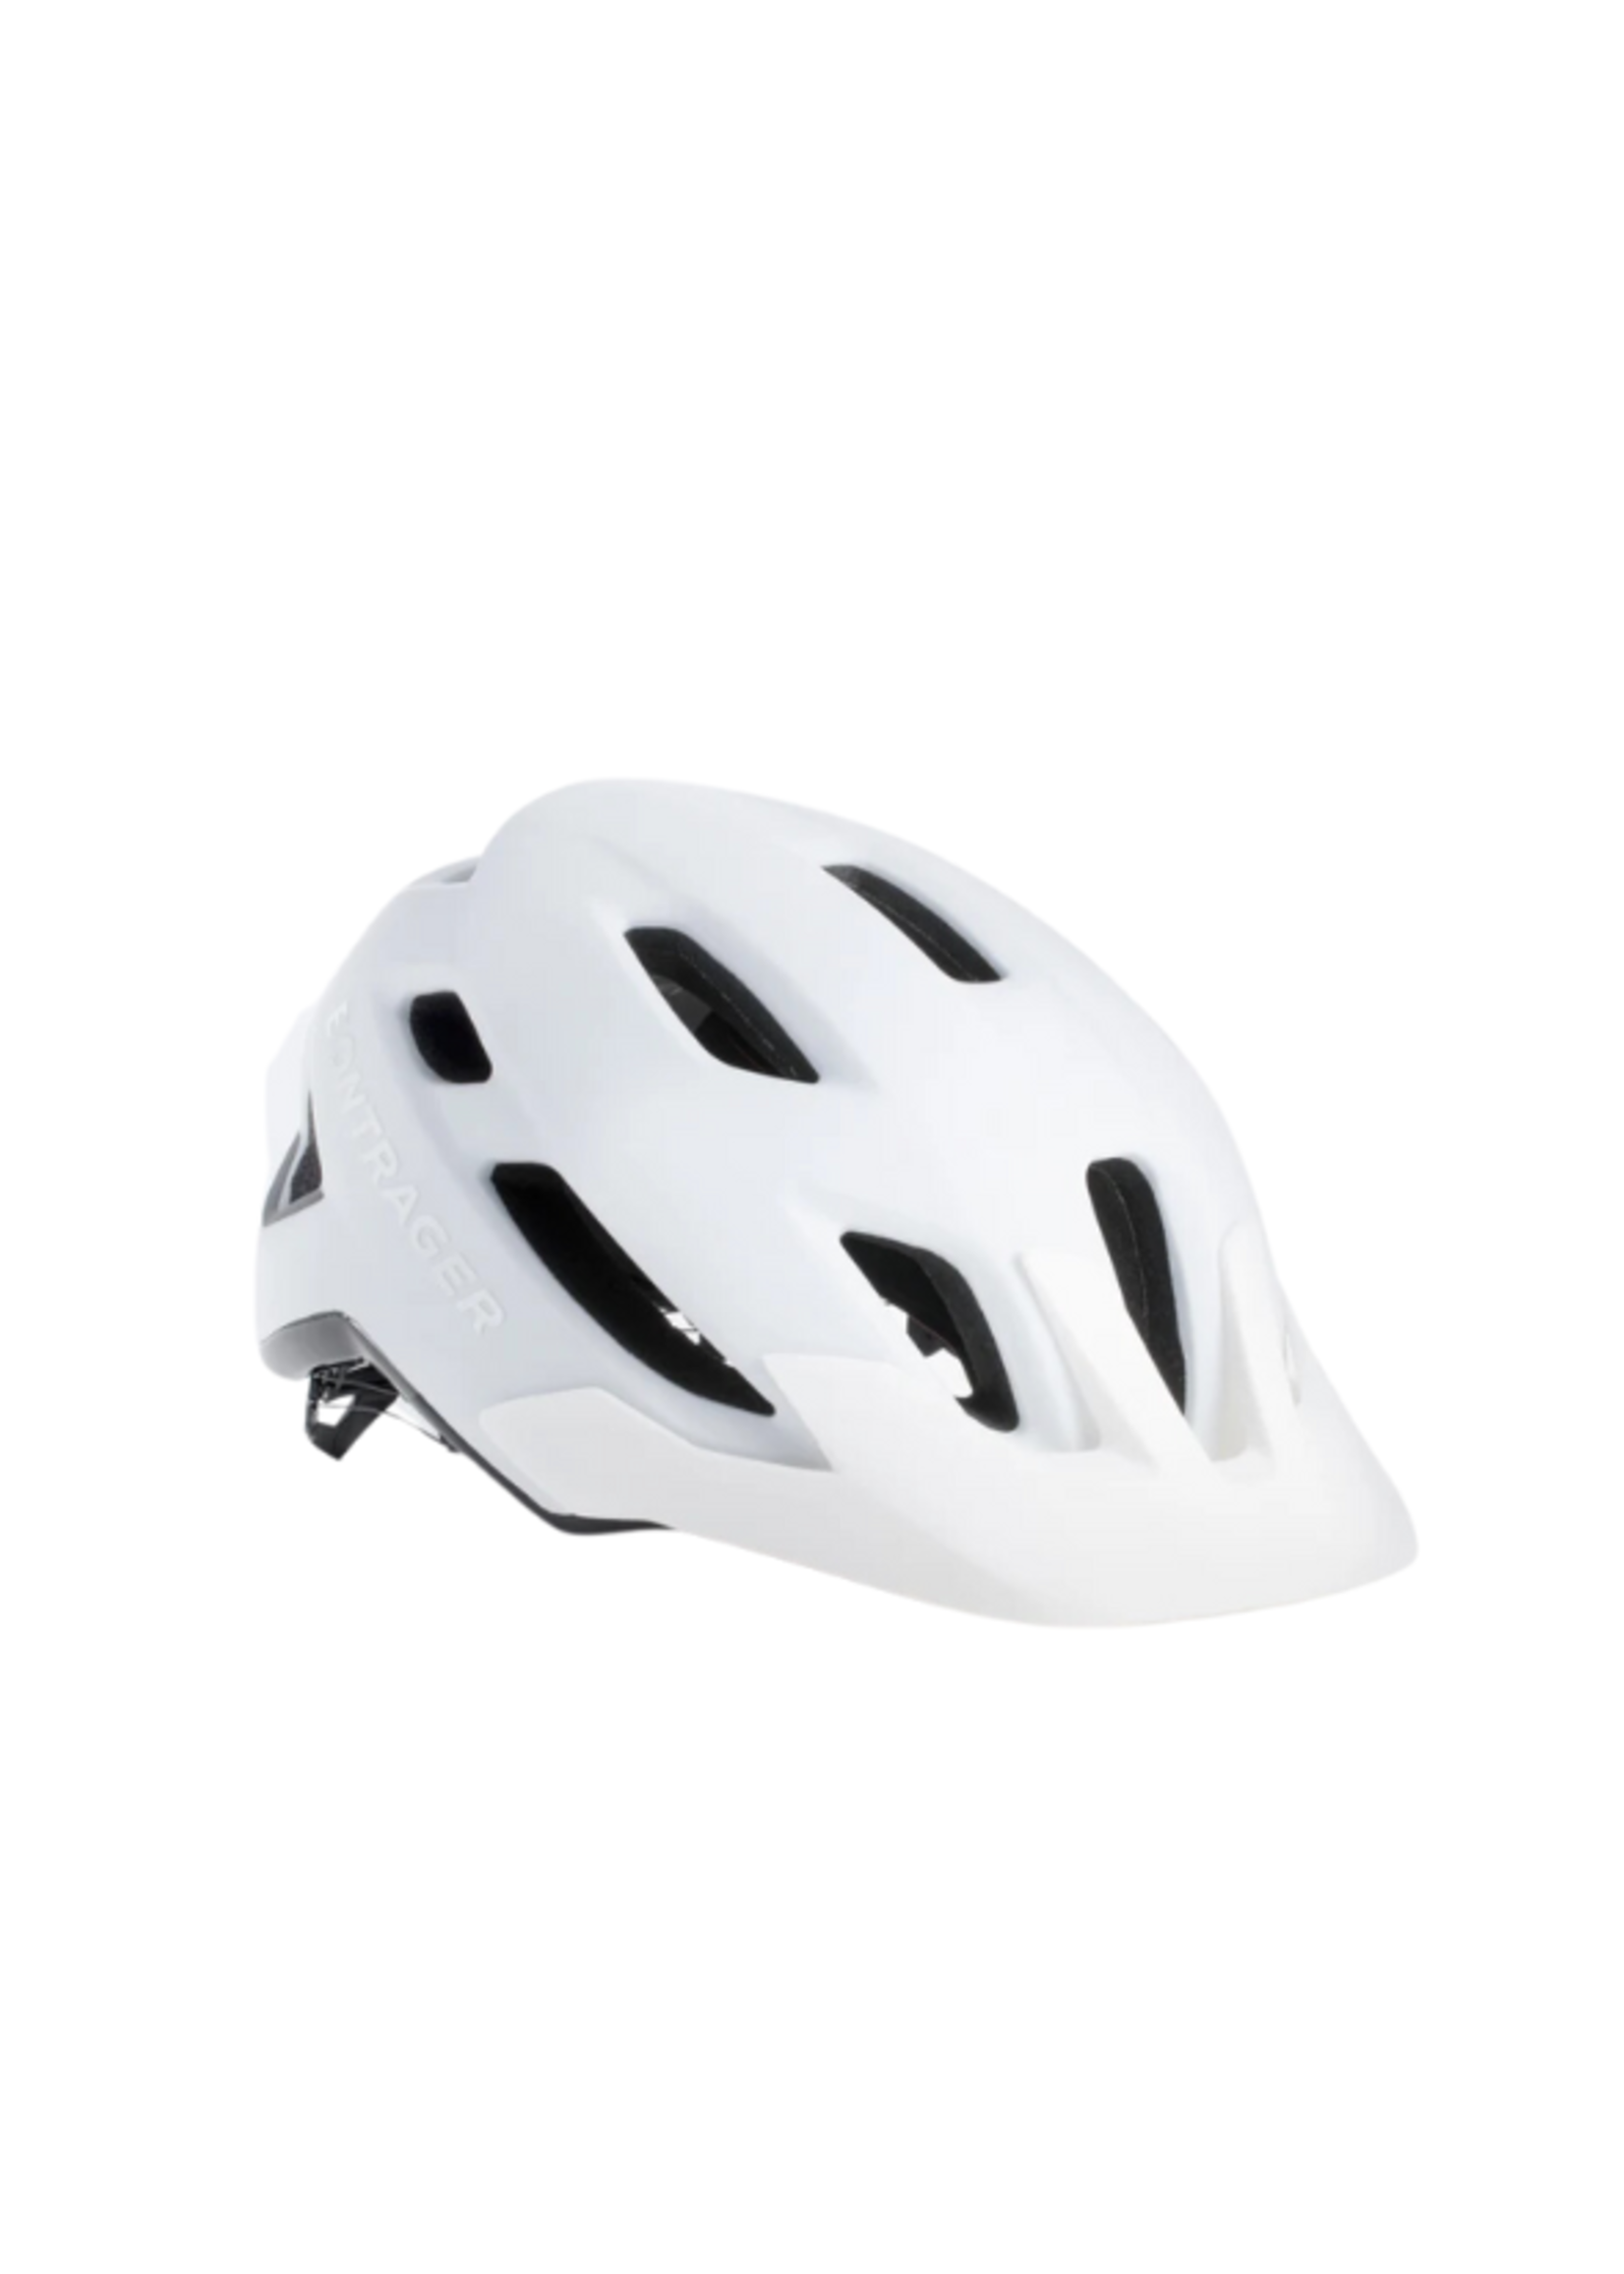 Bontager Bontrager Quantum Mips Bike Helmet